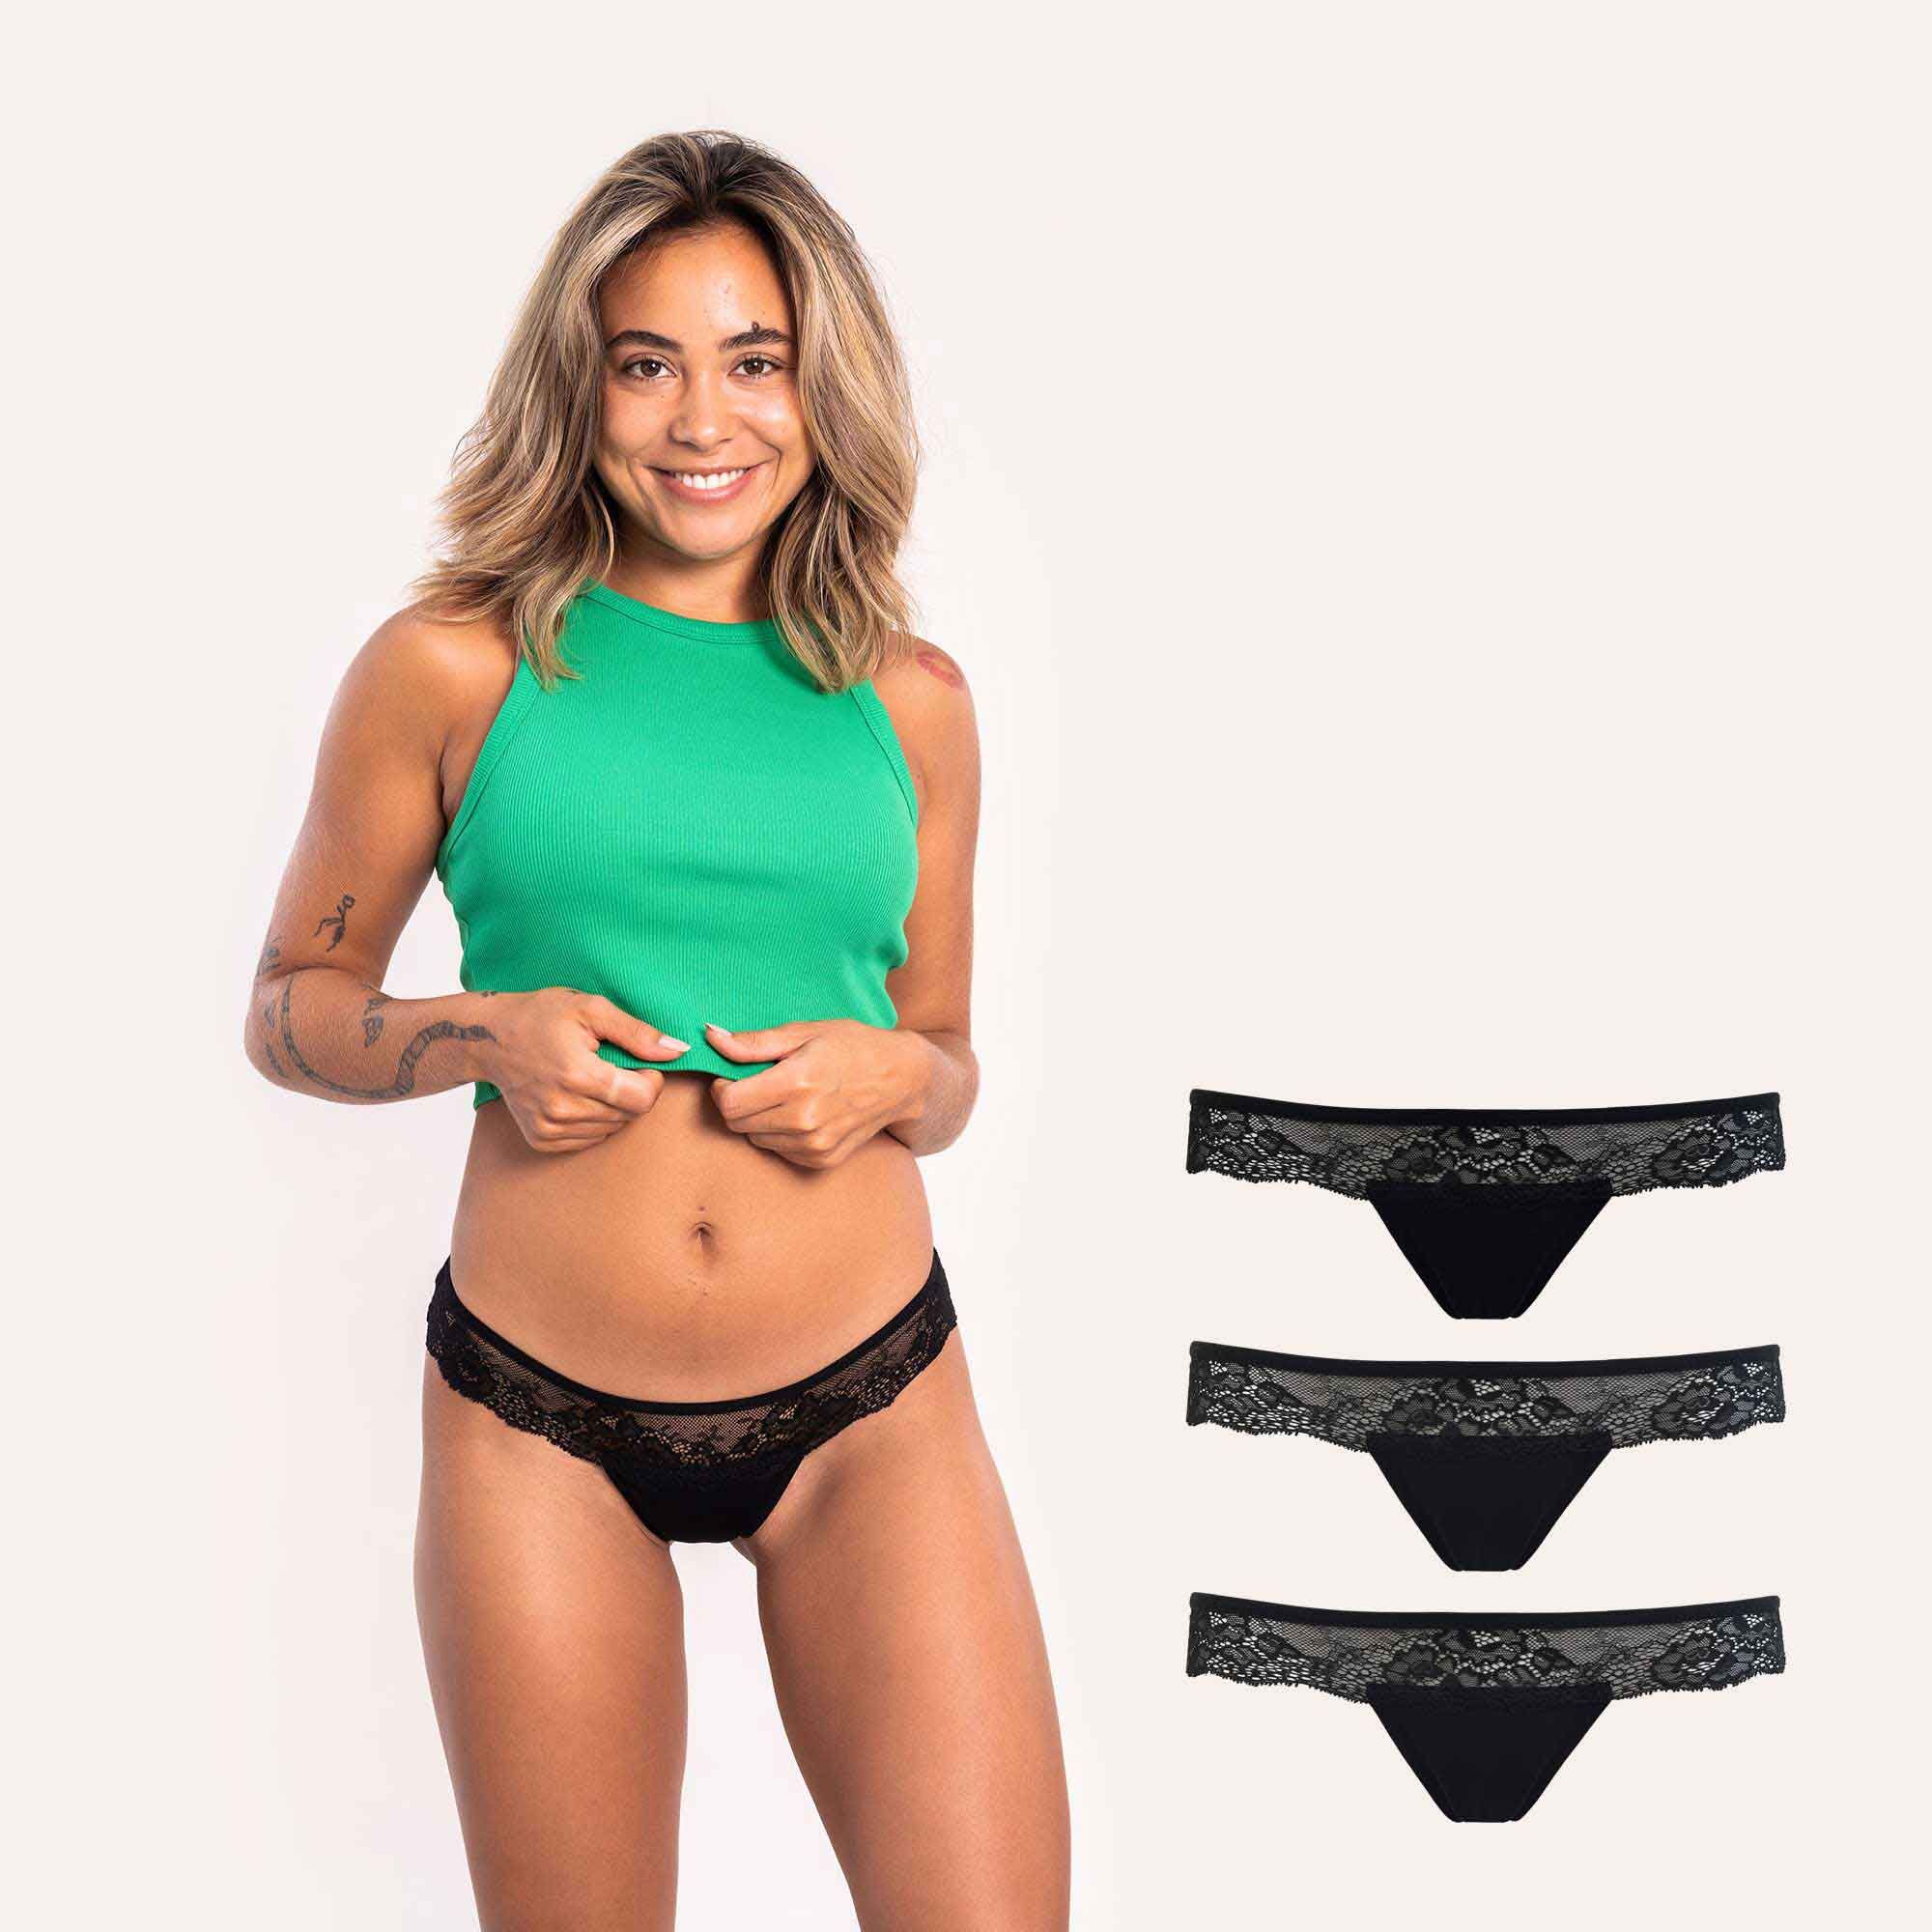 Everyday Underwear Brasiliana (Multipack of 3)